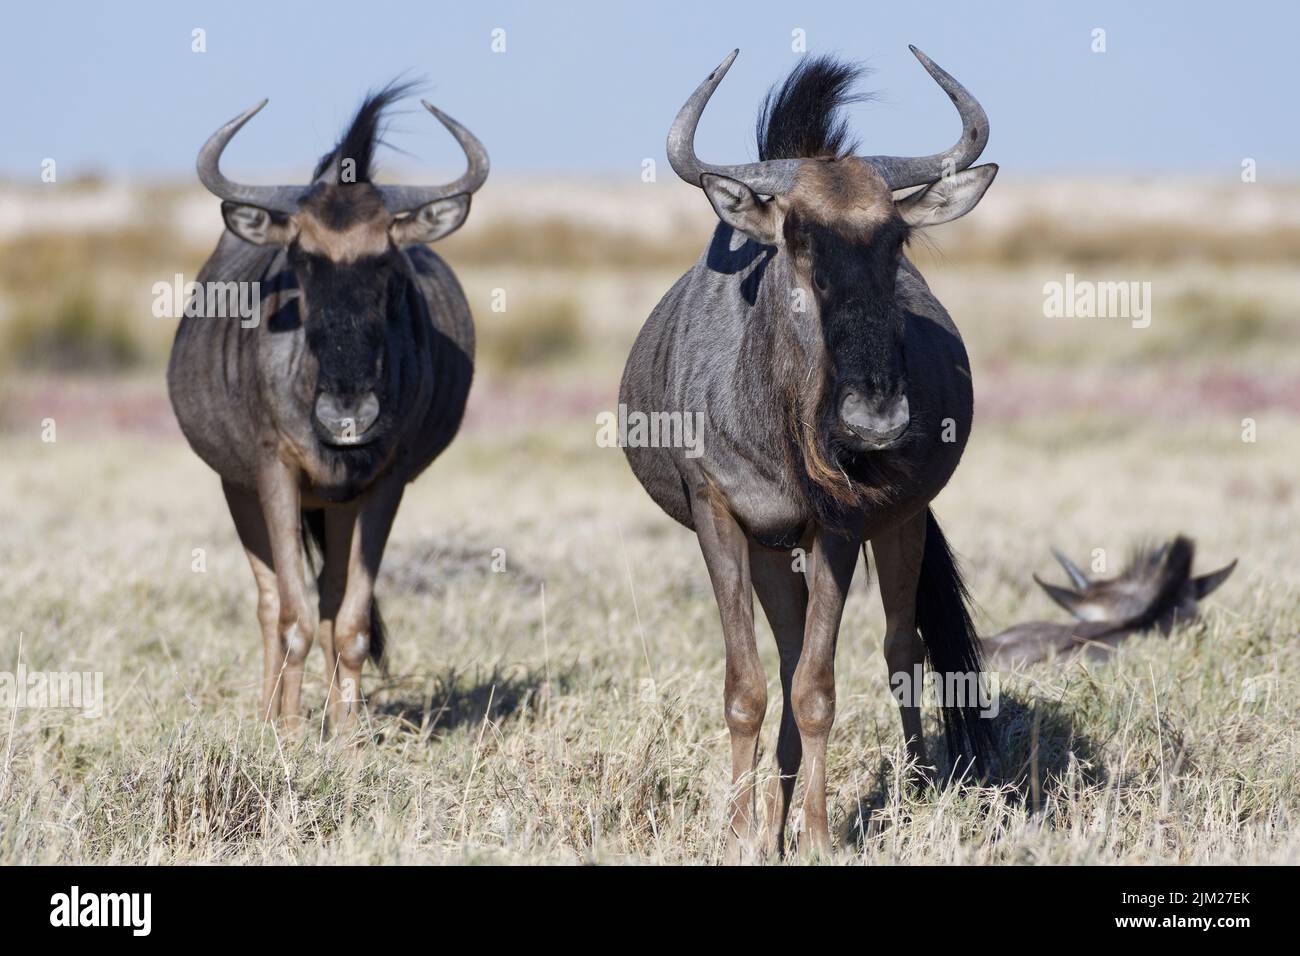 Blue wildebeests (Connochaetes taurinus), two adults standing on dry grass, savanna, Etosha National Park, Namibia, Africa Stock Photo